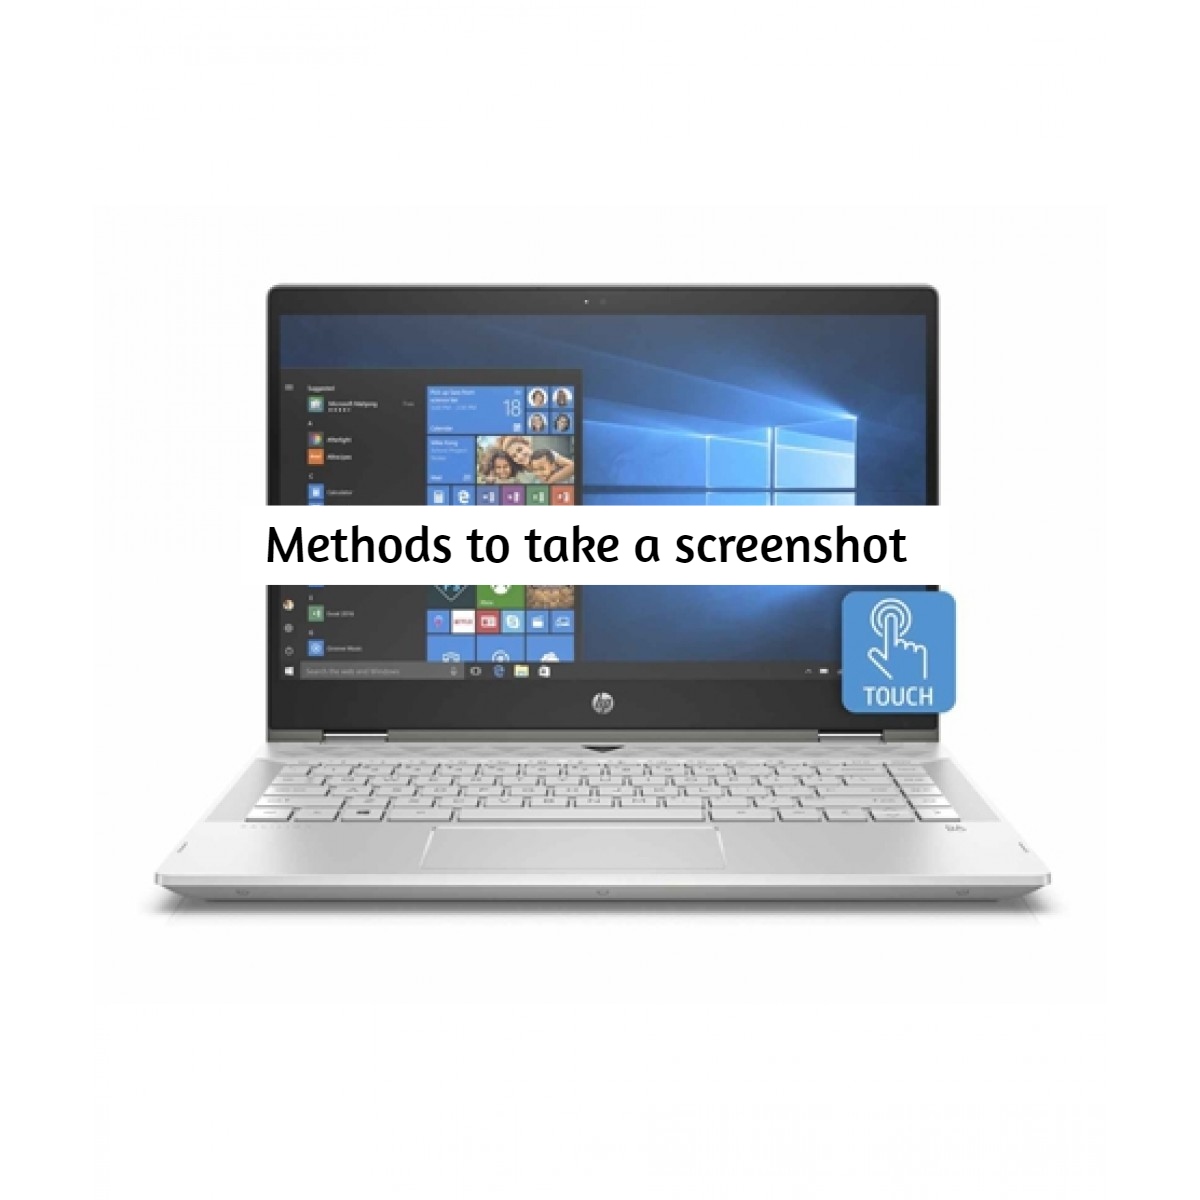 How to take a screenshot on HP Pavilion x360